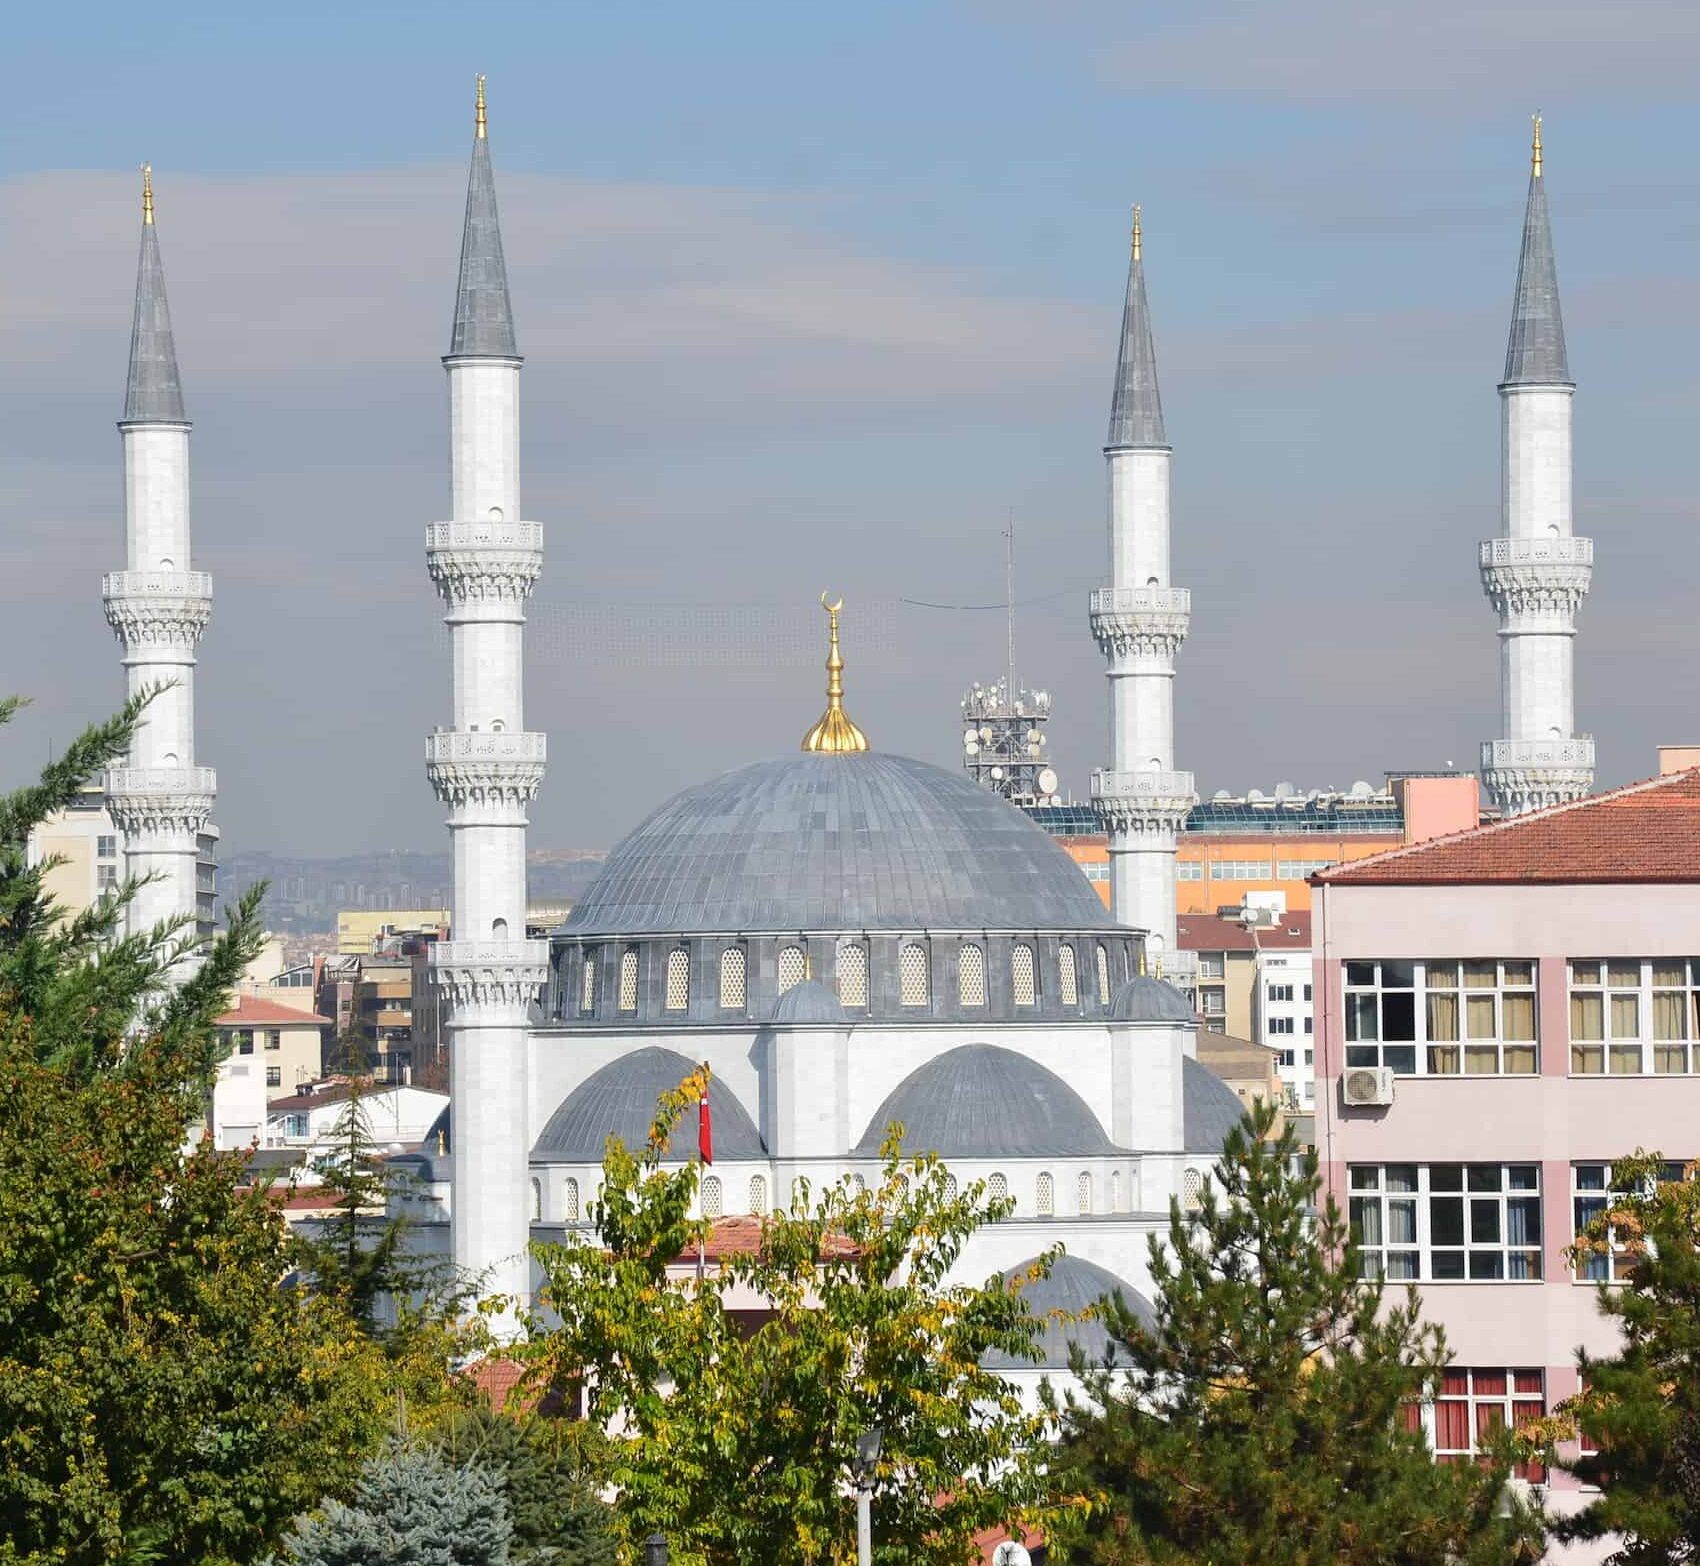 Dome and minarets of the Melike Hatun Mosque in Ankara, Turkey